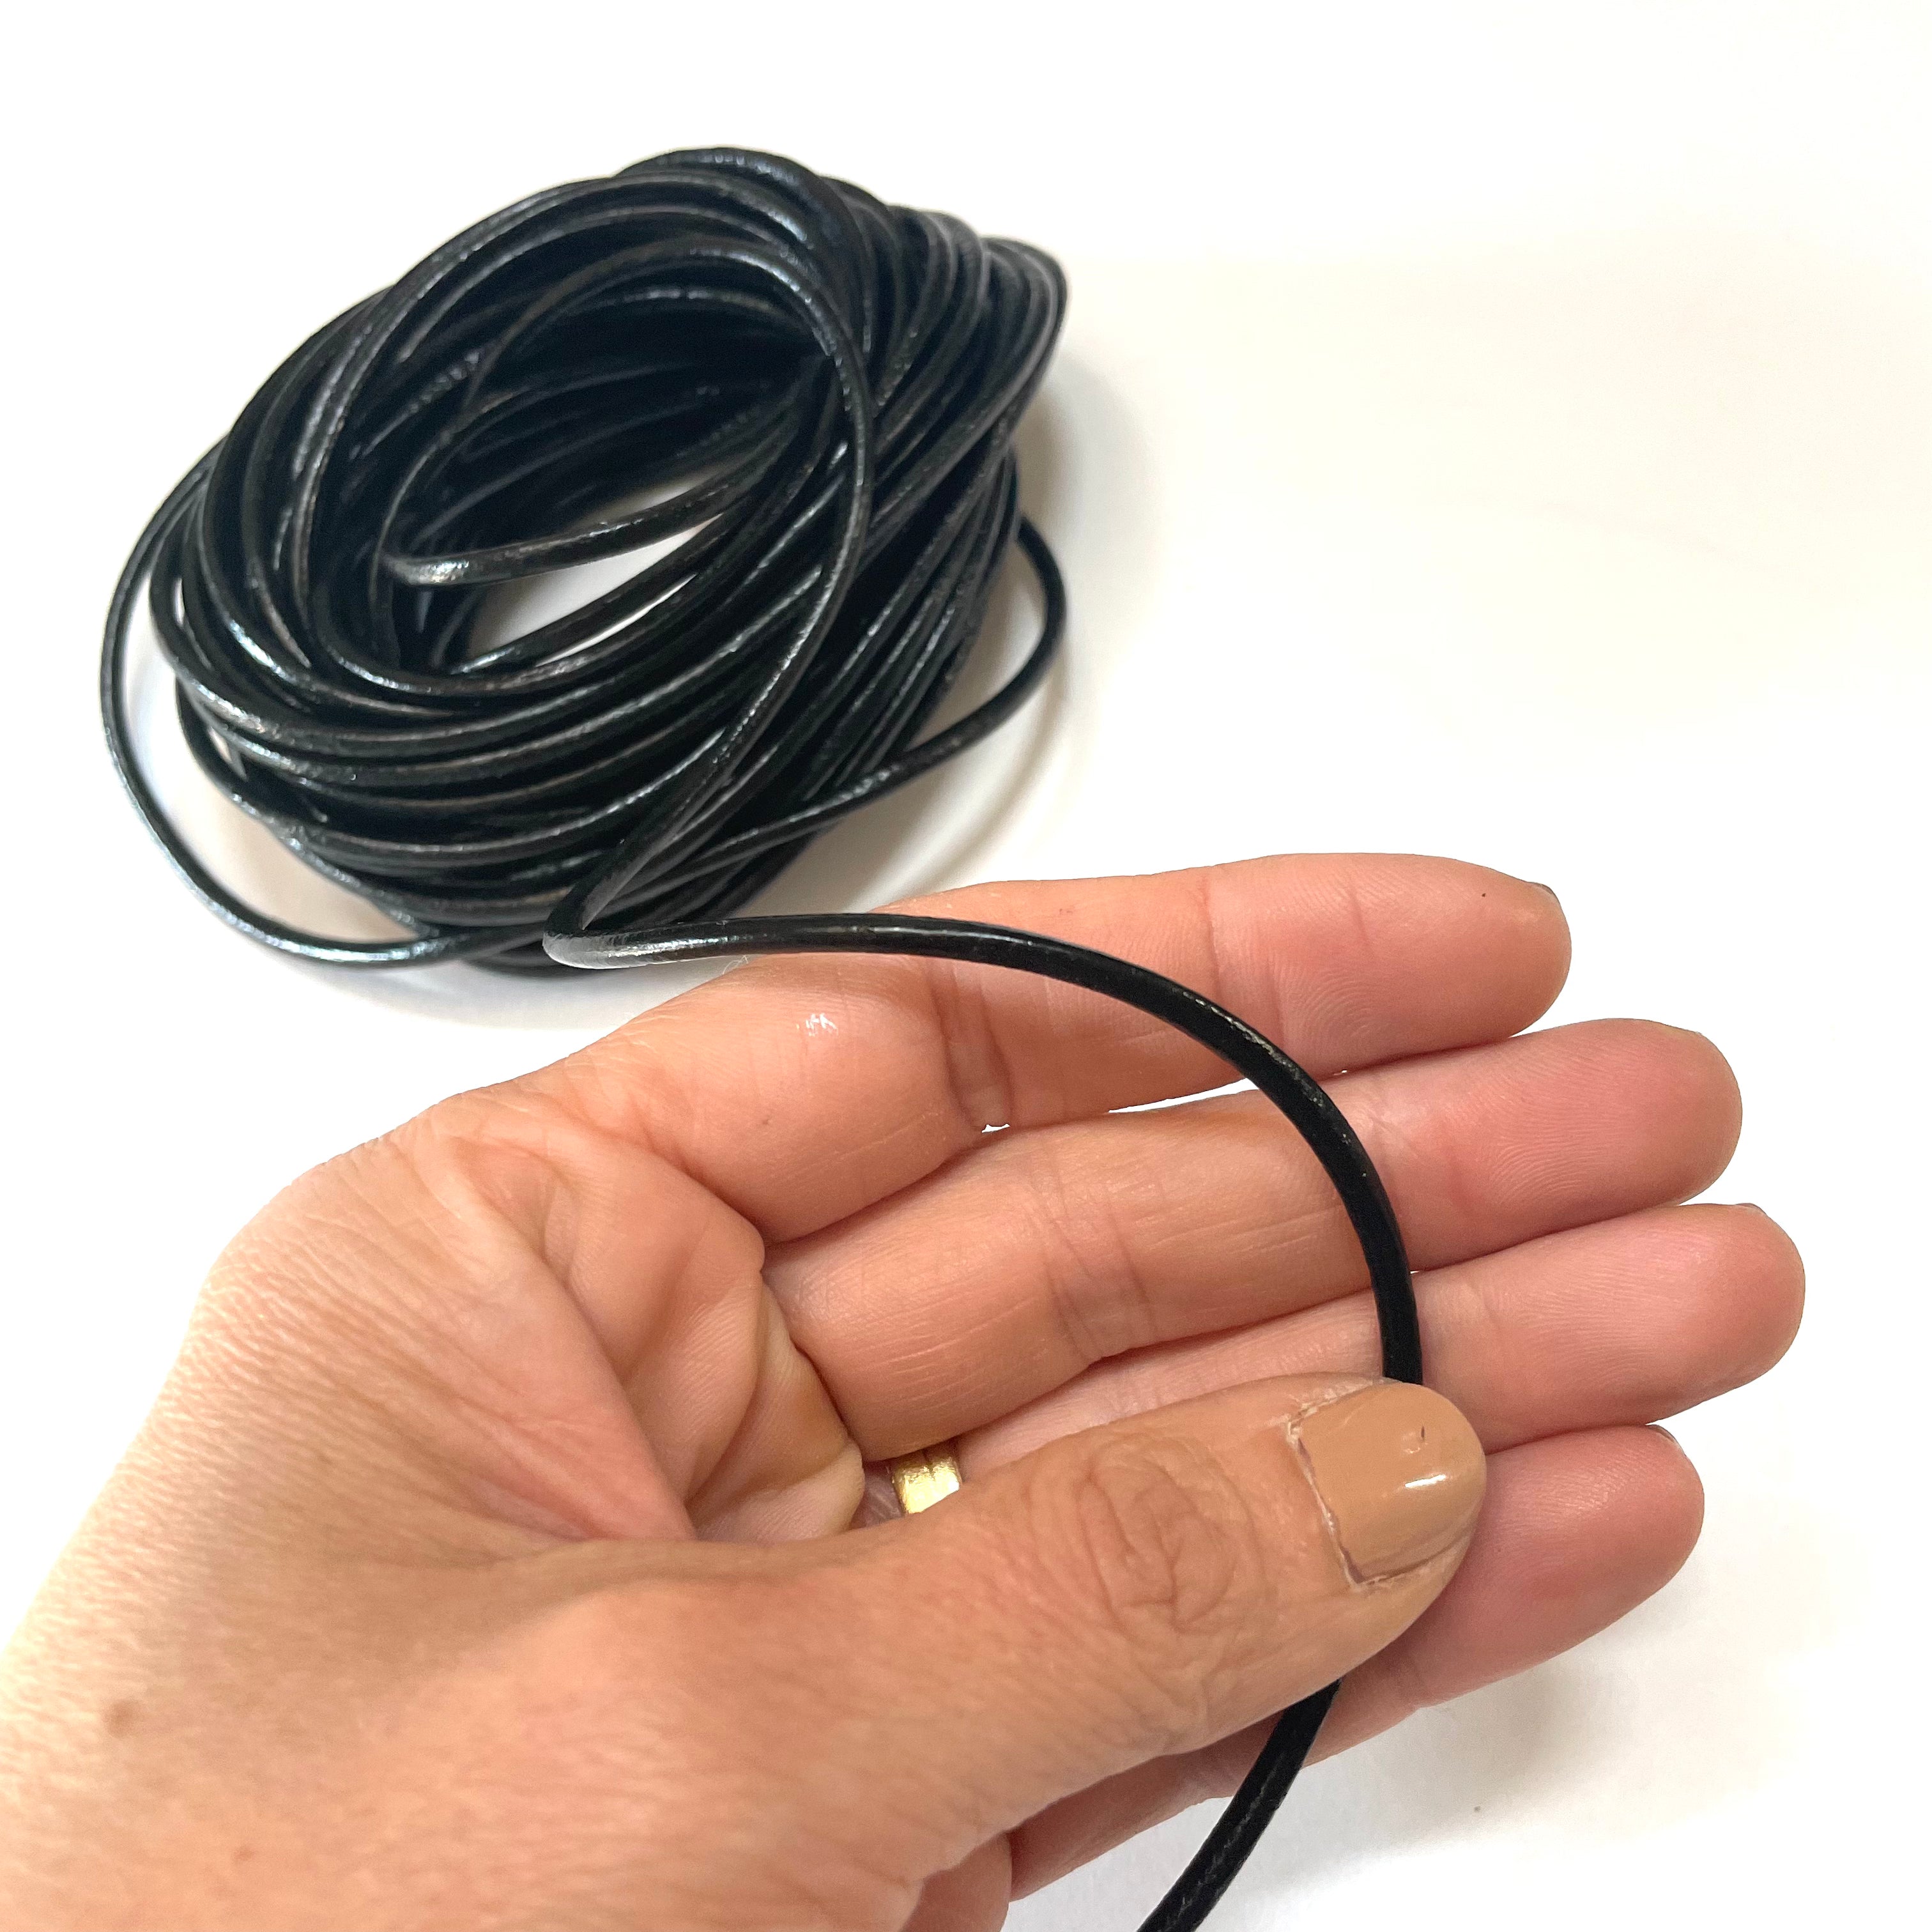 Natural Genuine Leather Cord per 10 Yards - Black 3mm